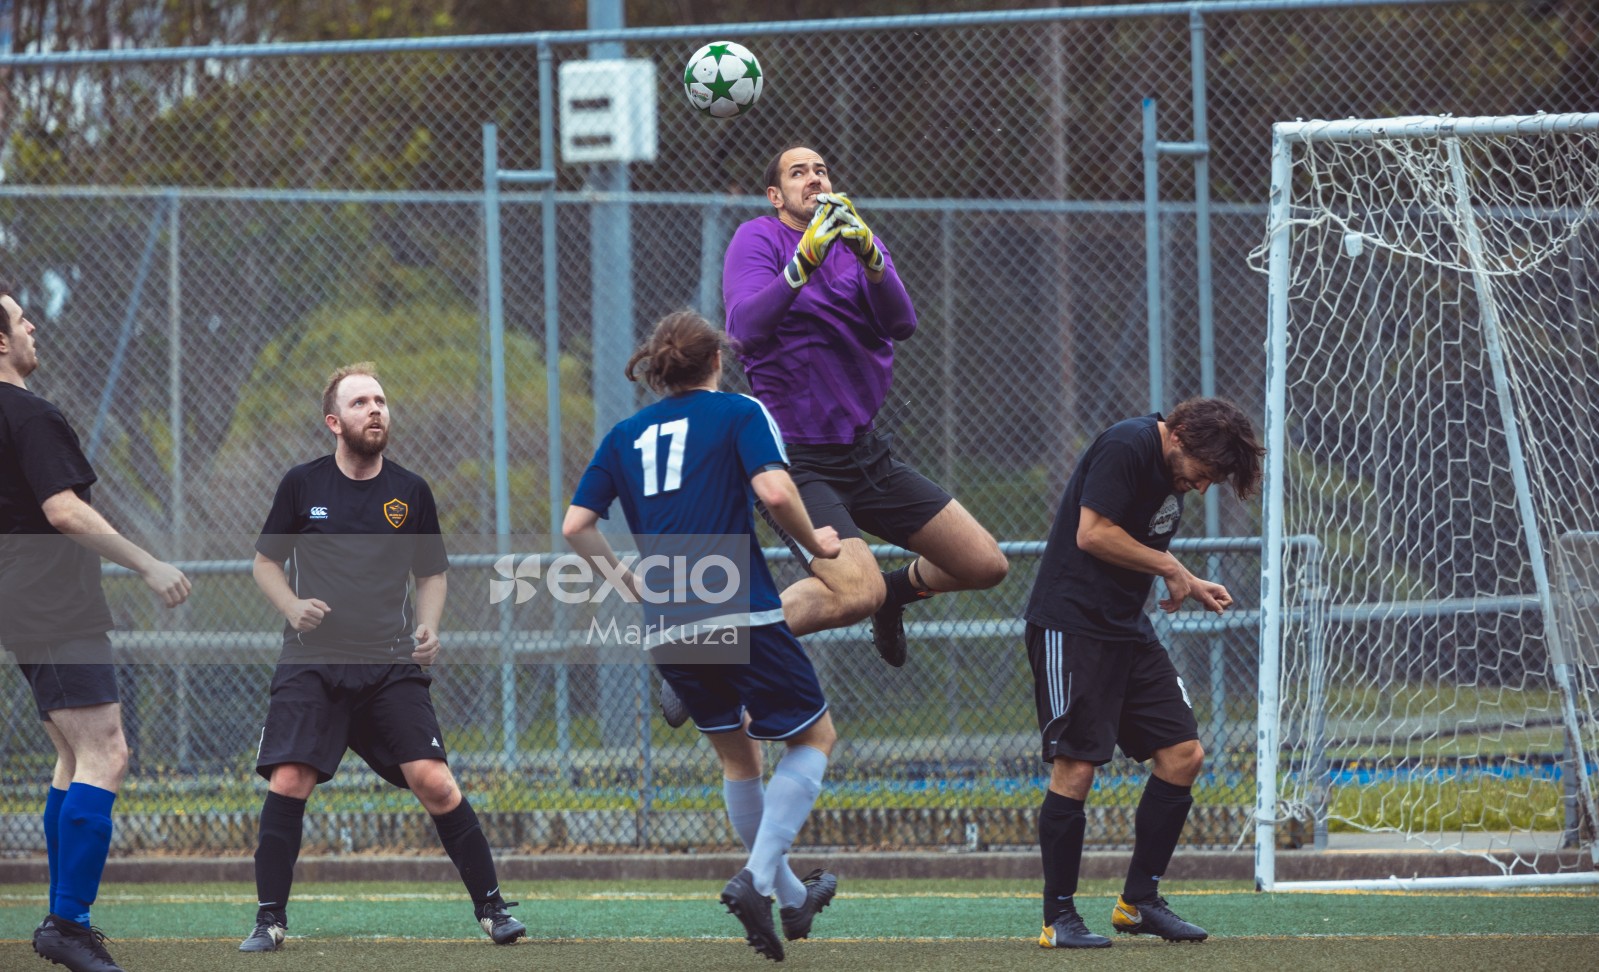 Goalkeeper jumps to hit away ball midair - Sports Zone sunday league